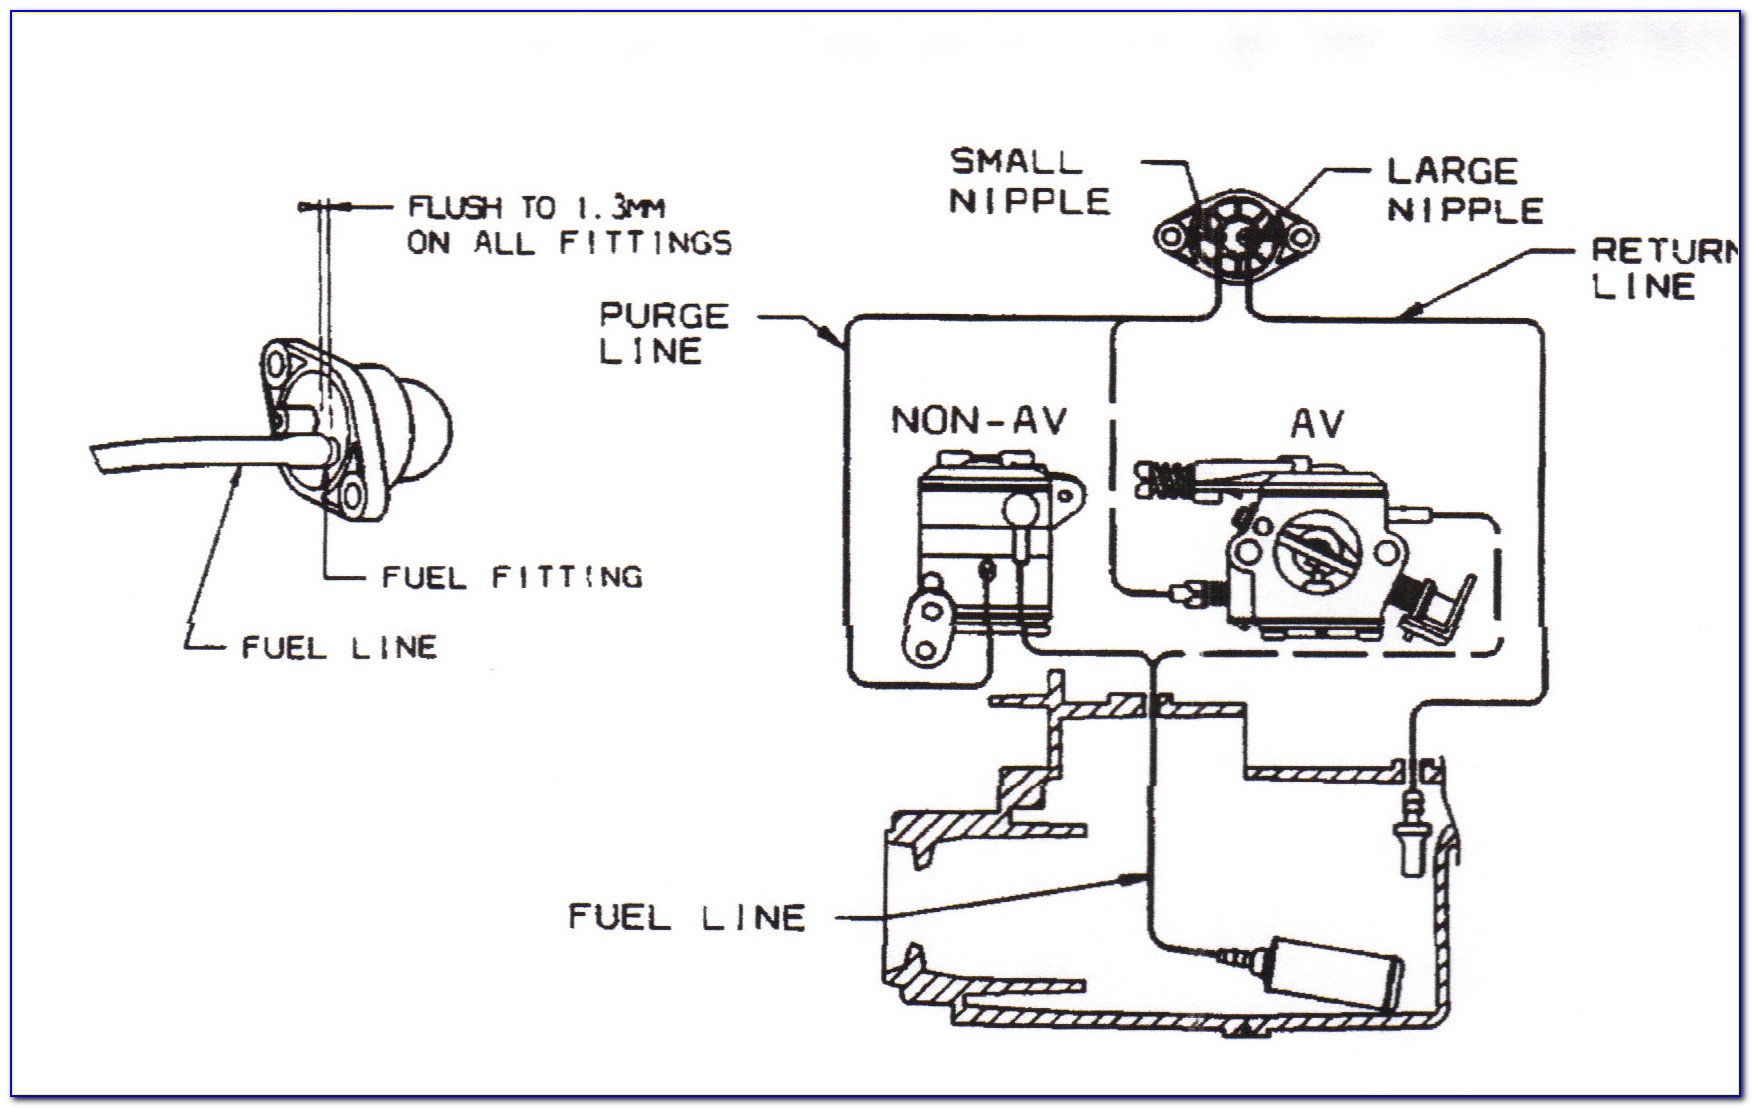 Craftsman 18 42cc Chainsaw Fuel Line Diagram